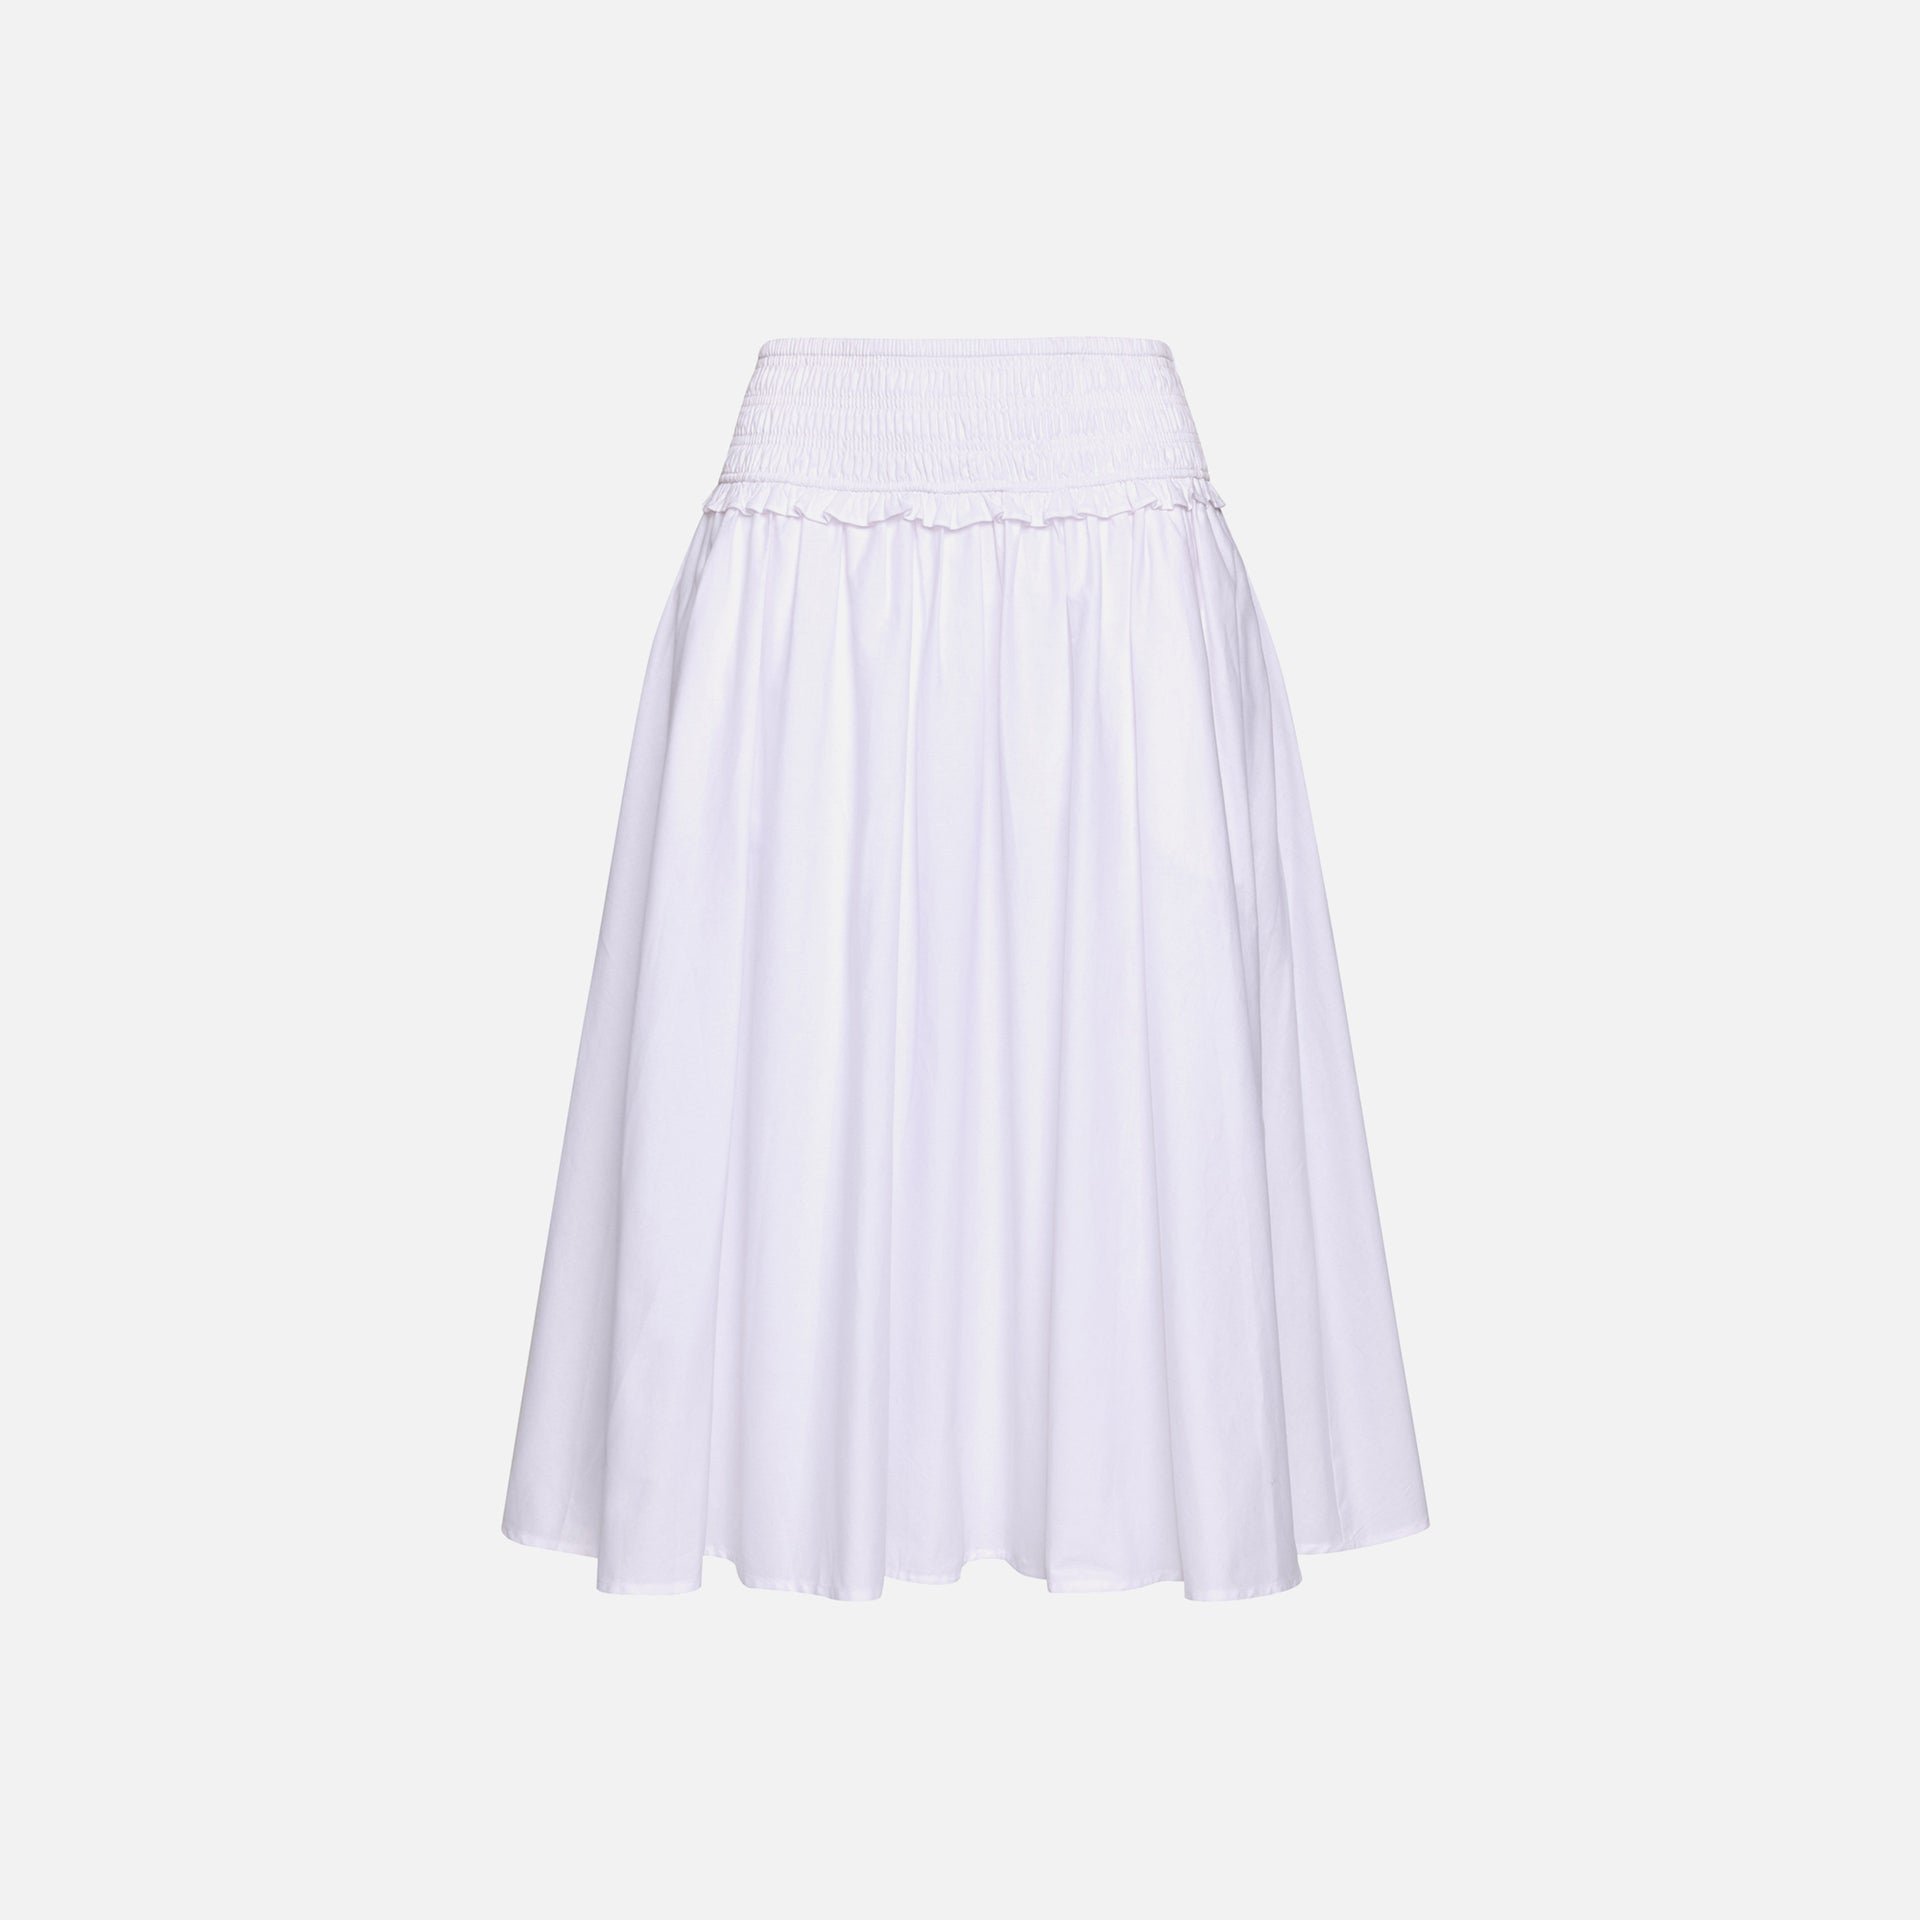 GUIZIO Fontana Skirt - White